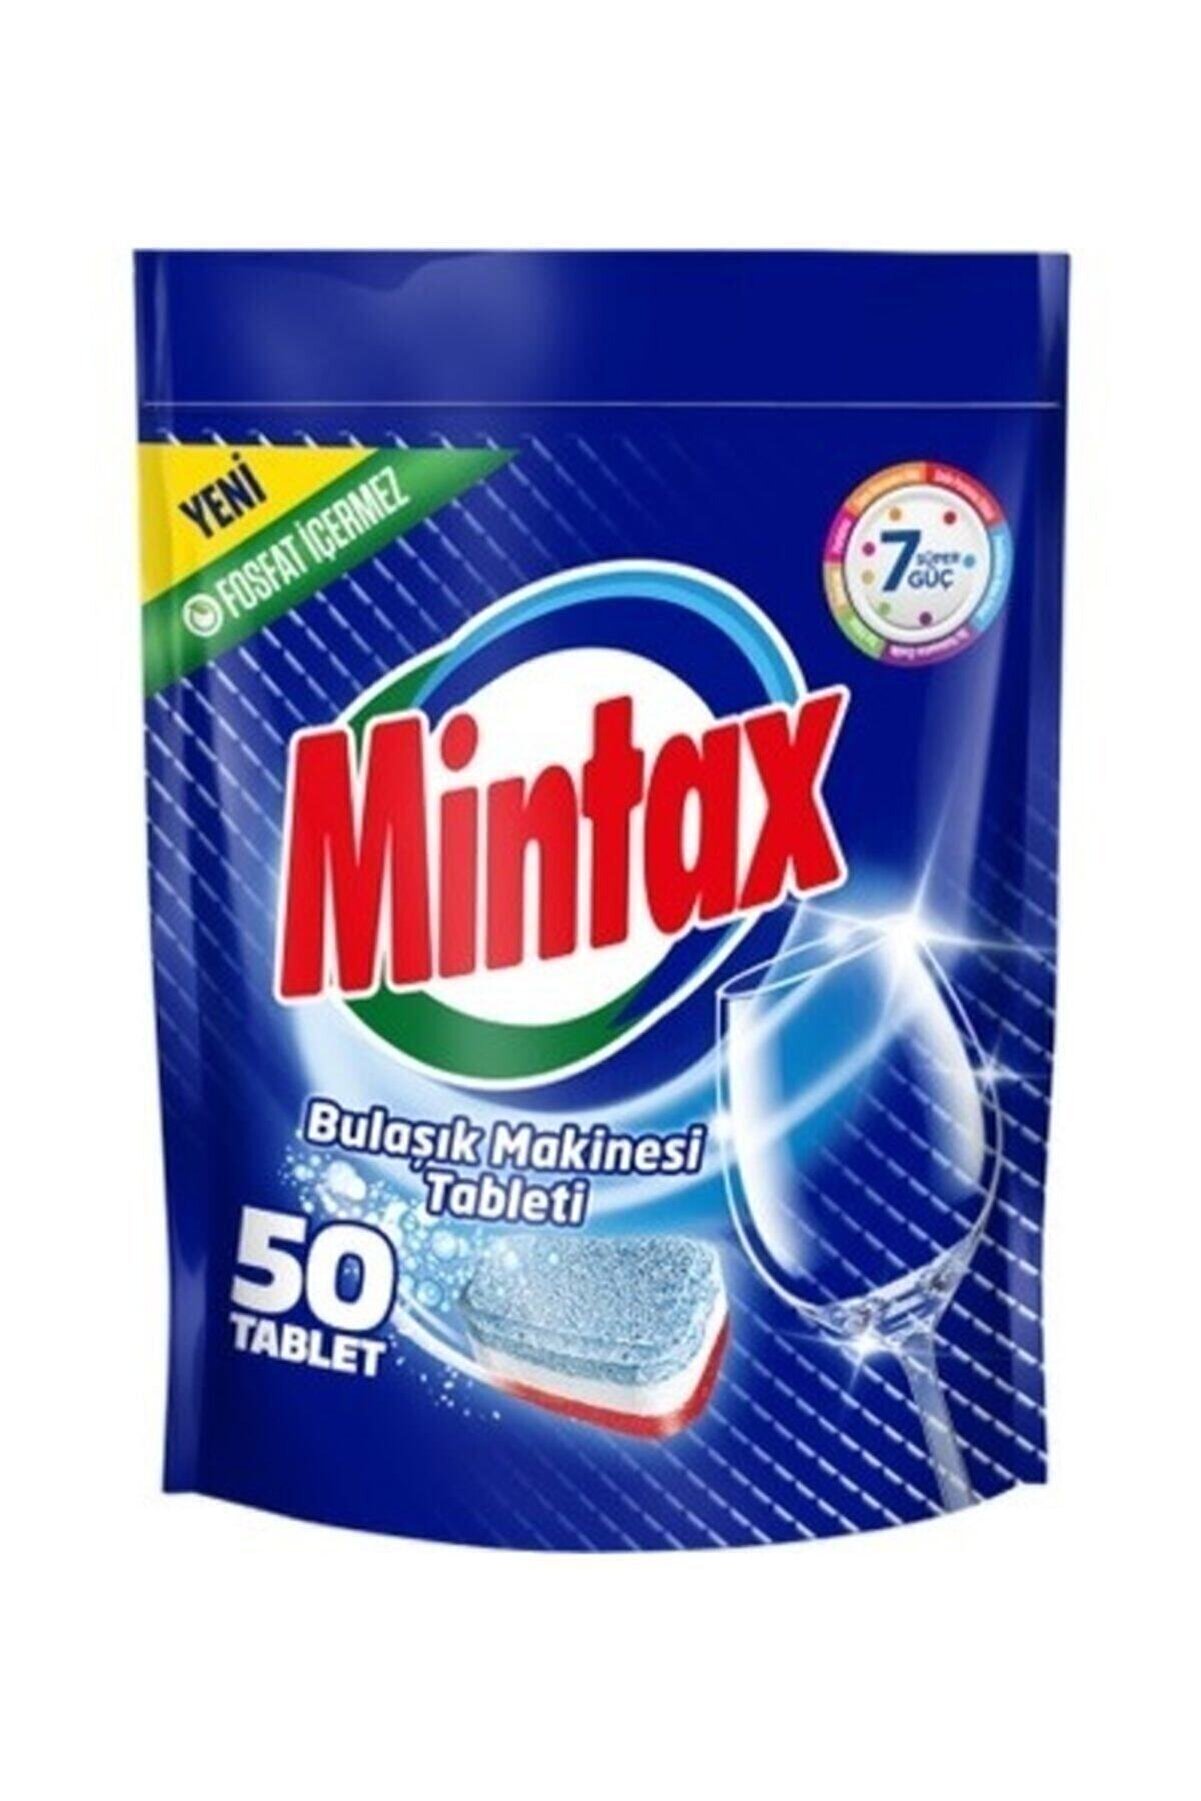 Mintax 7 Süper Güç Bulaşık Makinesi Tableti 50'li